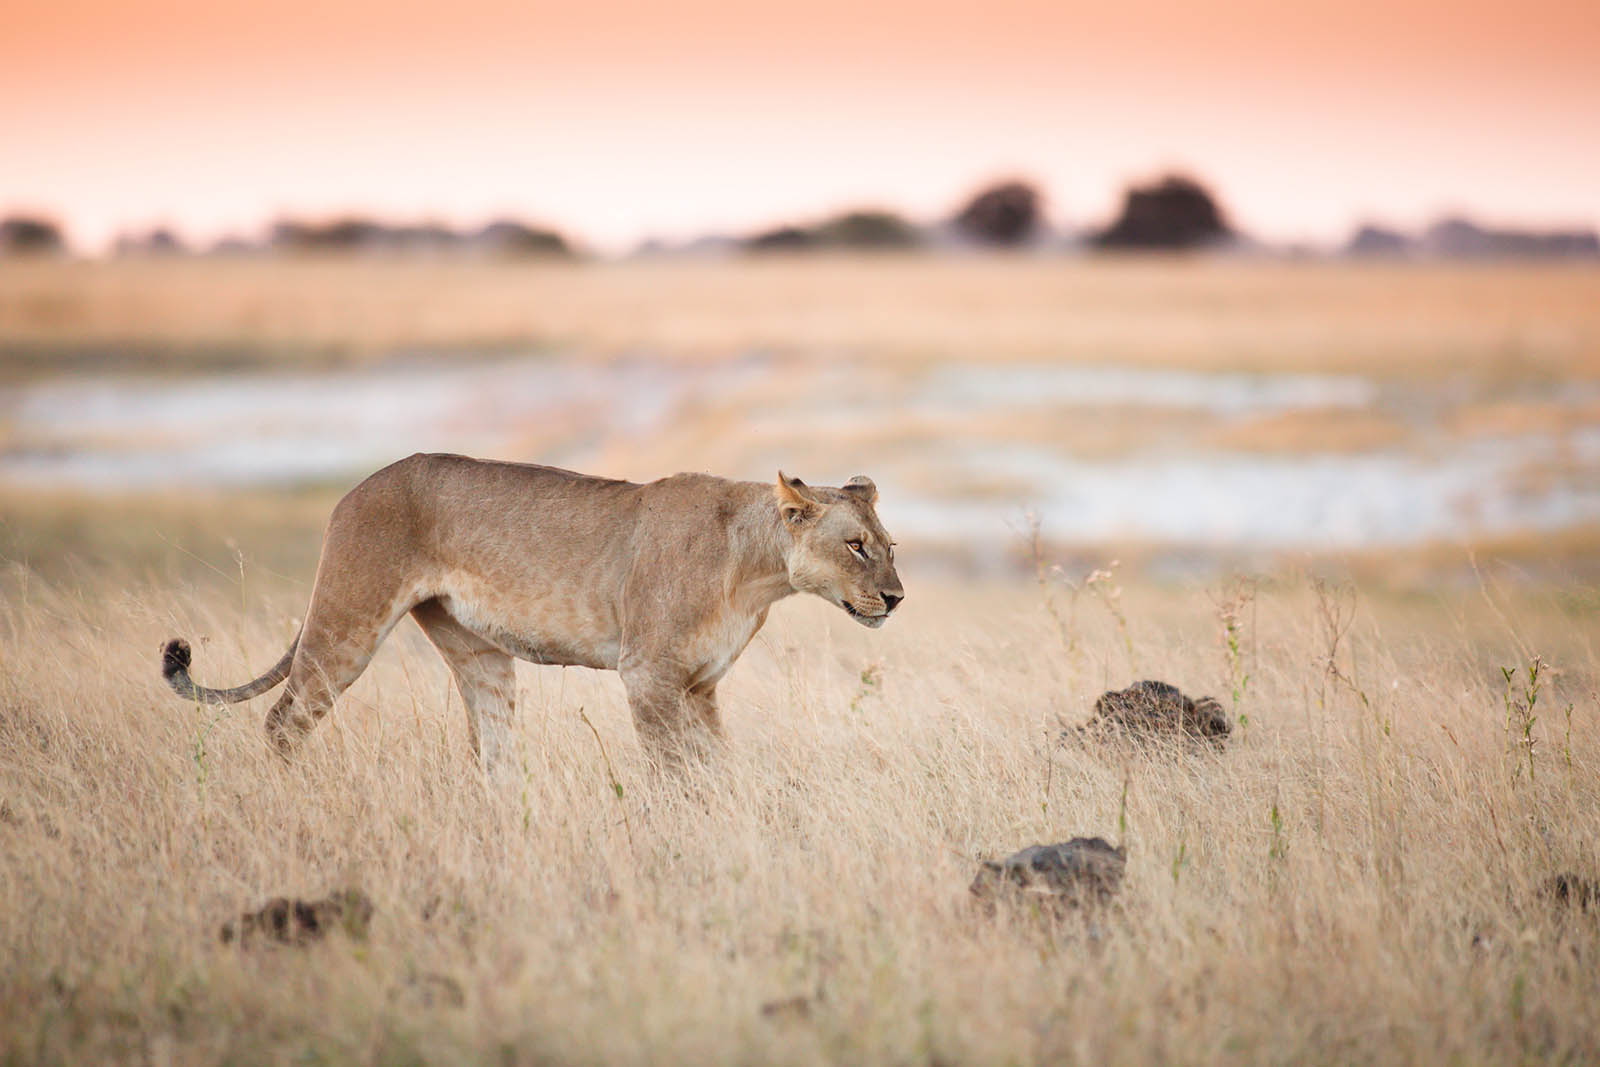 A lioness in Chobe National Park, Botswana | Safari in Botswana